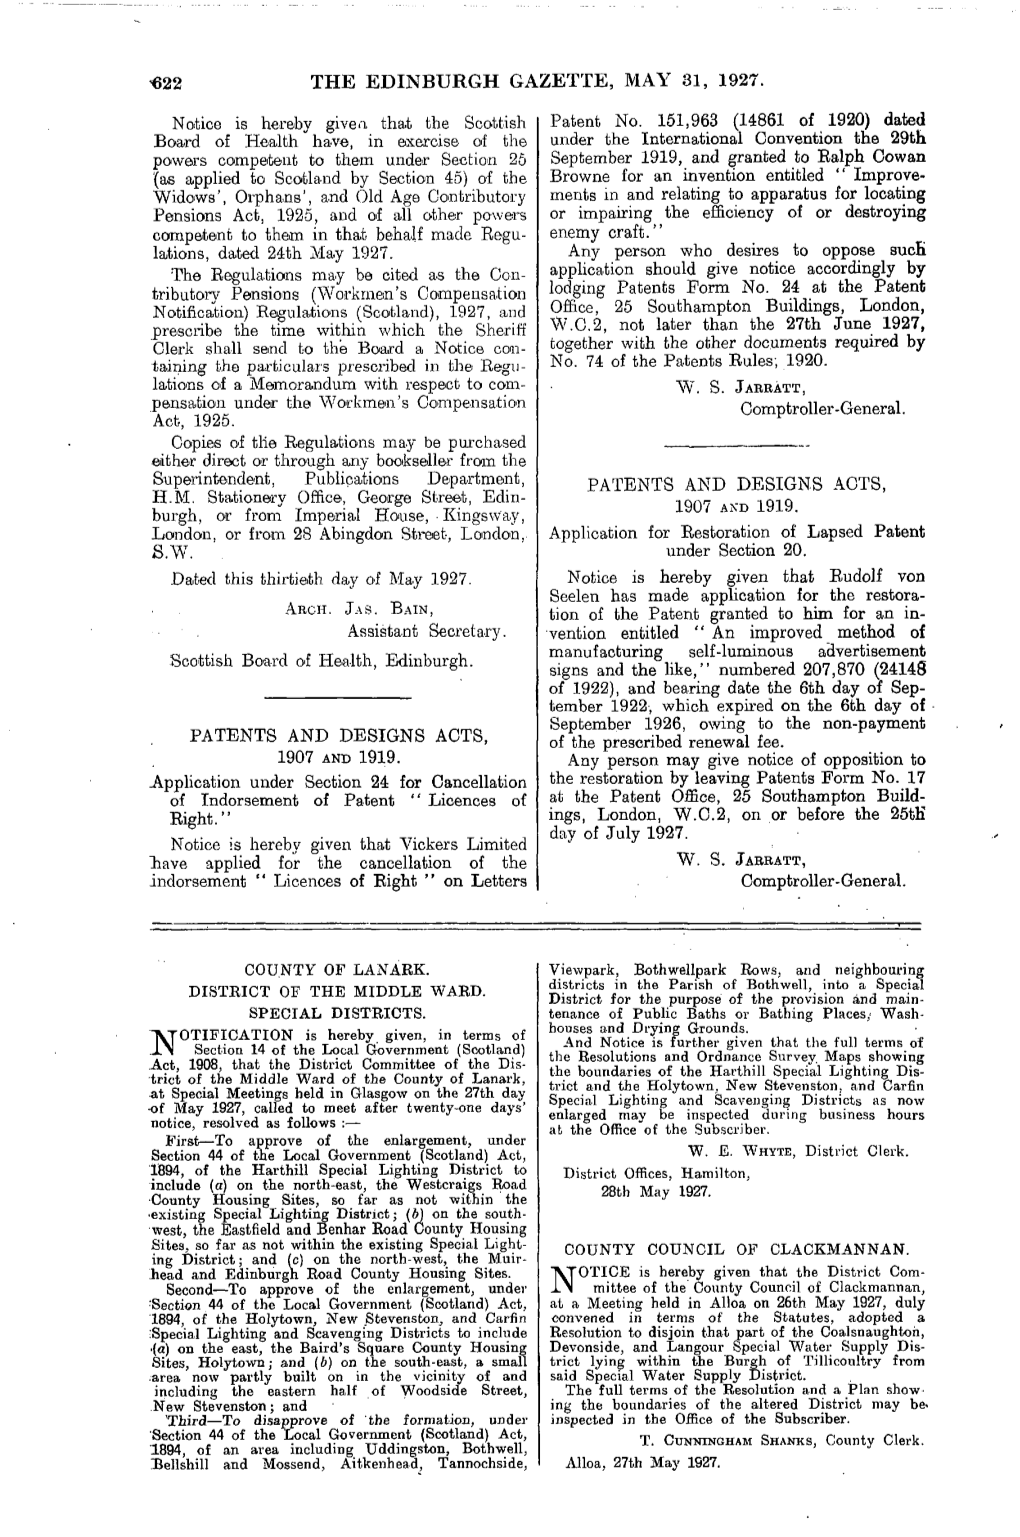 The Edinburgh Gazette, May 31, 1927